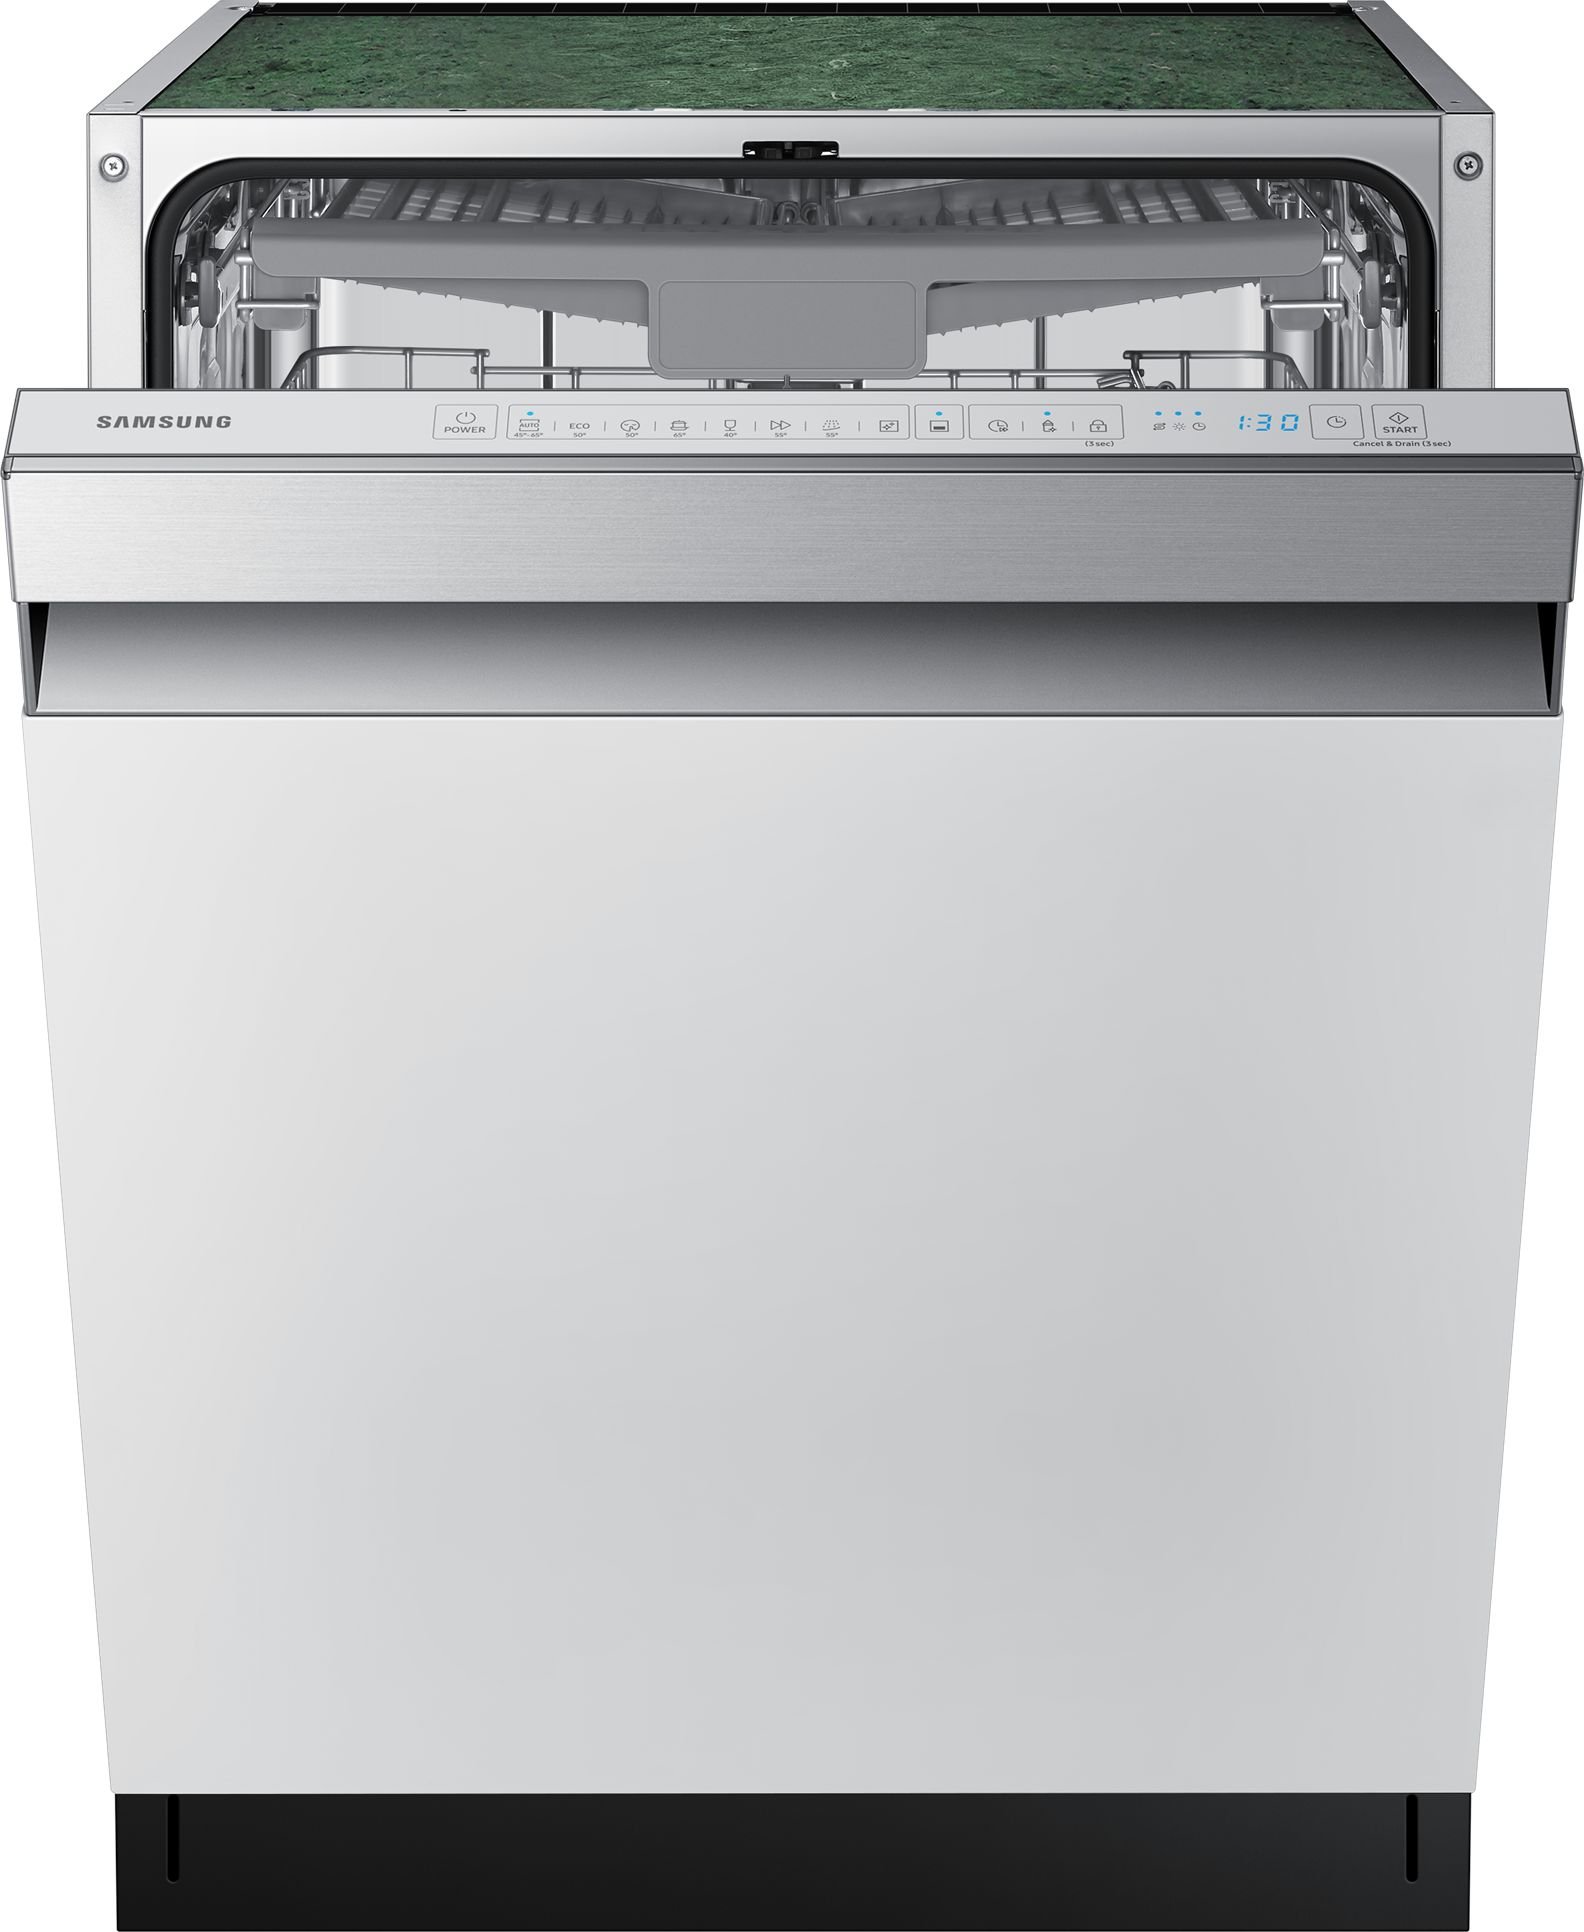 Masini de spalat vase incorporabile - Mașină de spălat vase Samsung DW60R7050SS